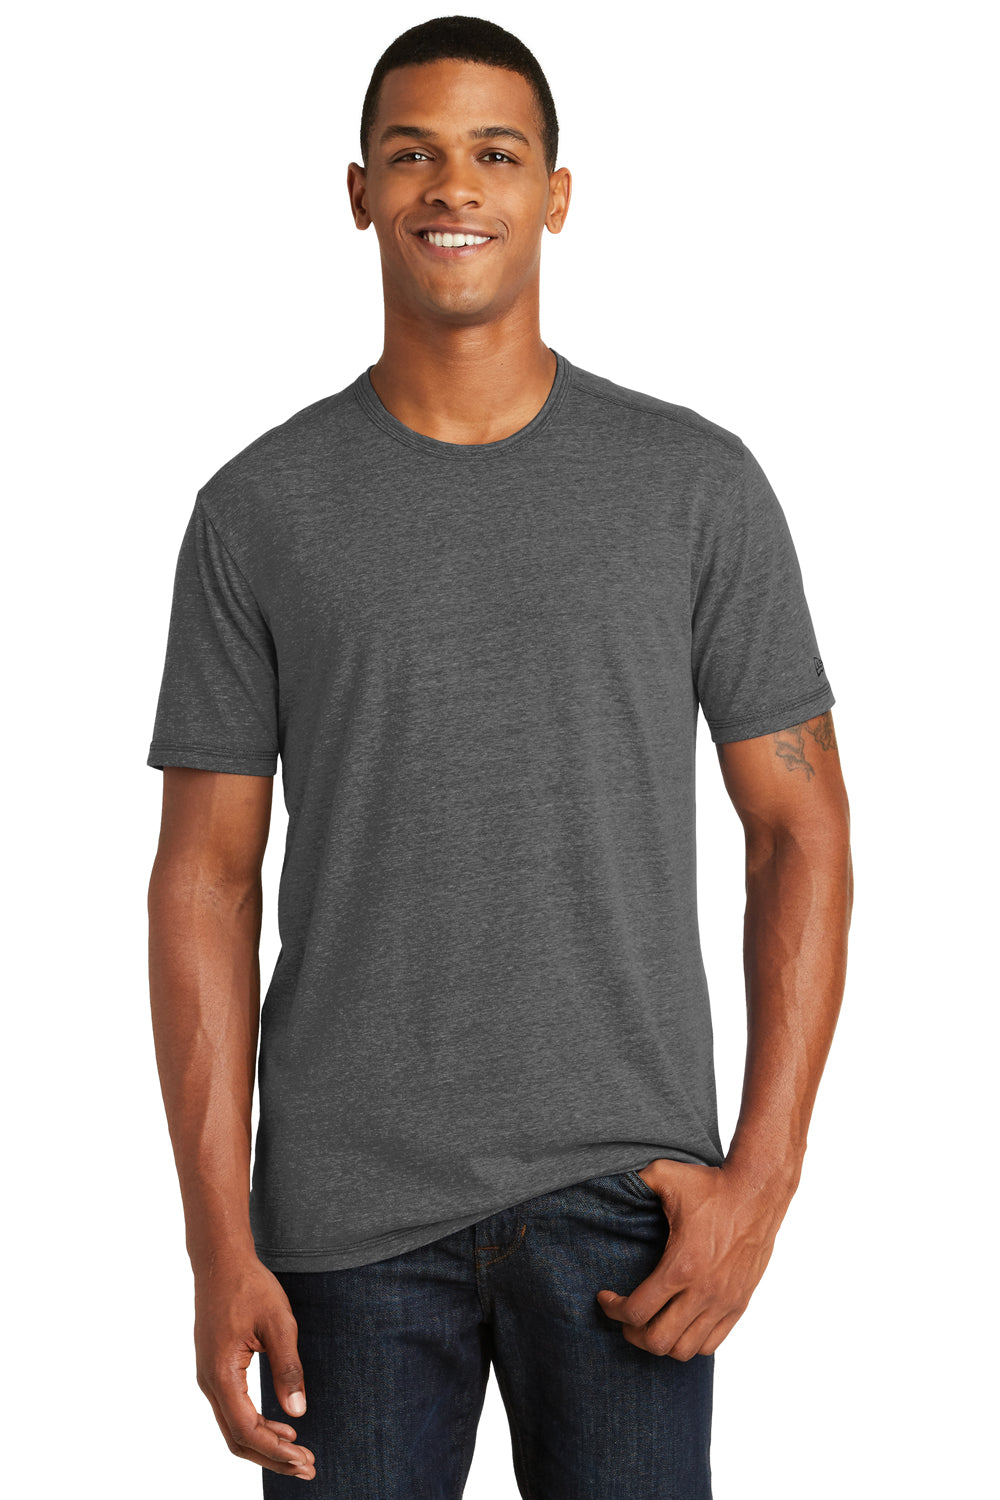 New Era NEA130 Mens Performance Moisture Wicking Short Sleeve Crewneck T-Shirt Dark Graphite Grey Front